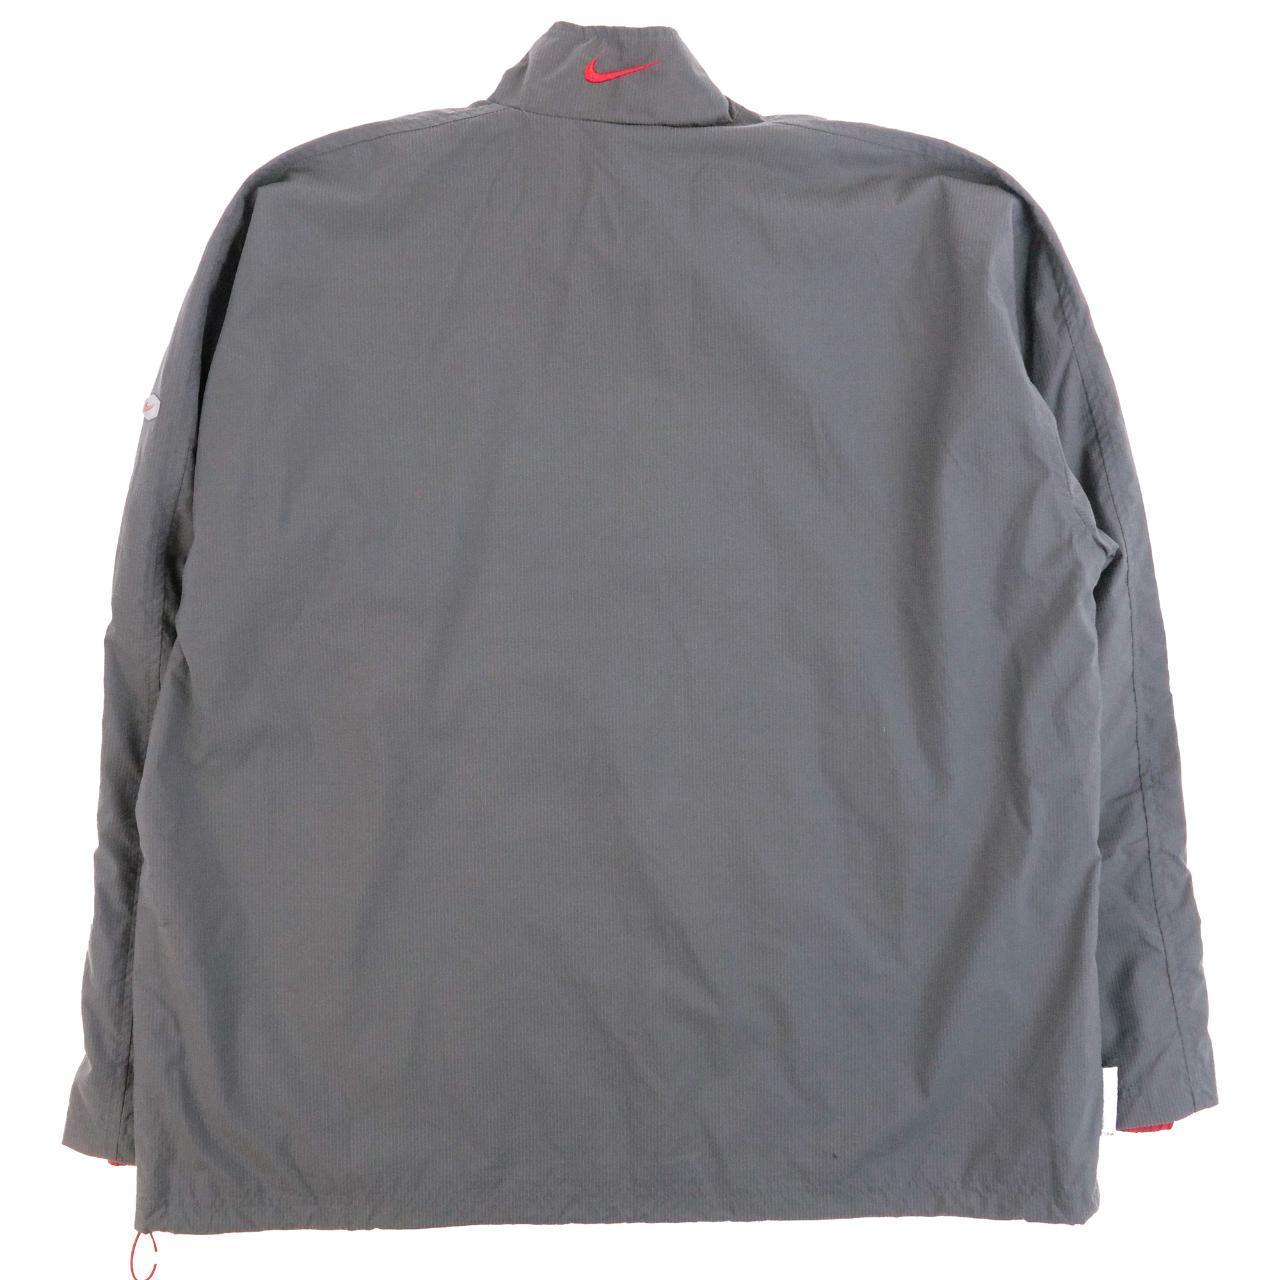 Vintage Nike Hex Asymmetrical Zip Jacket Size L - Known Source